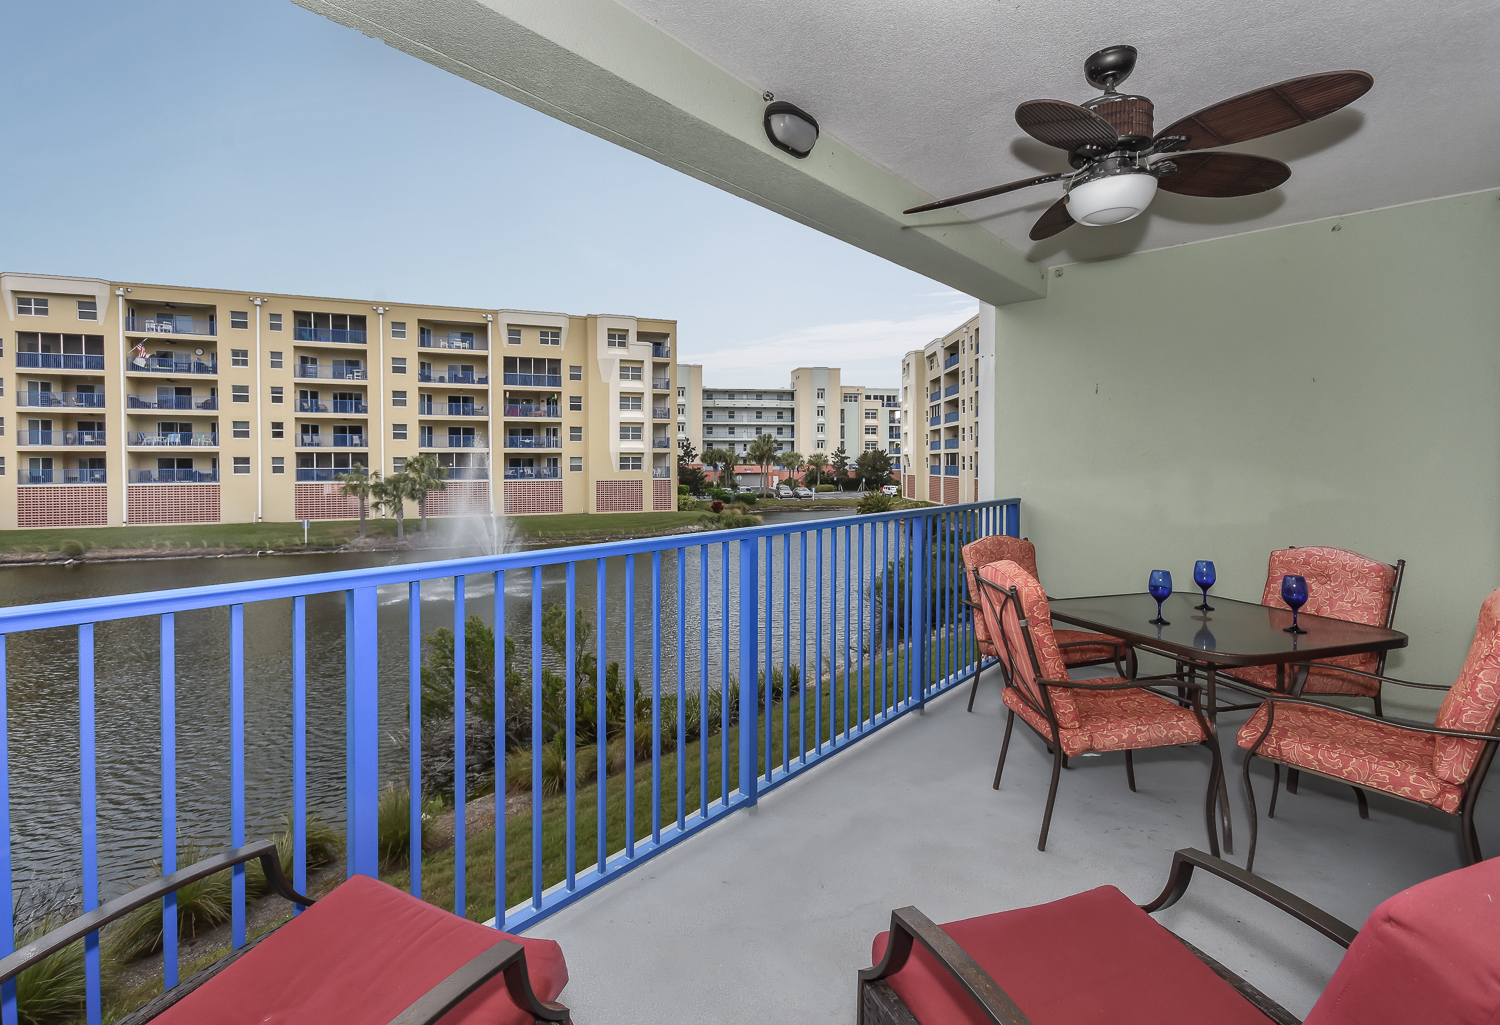 Balcony of this condo for rent New Smyrna Beach